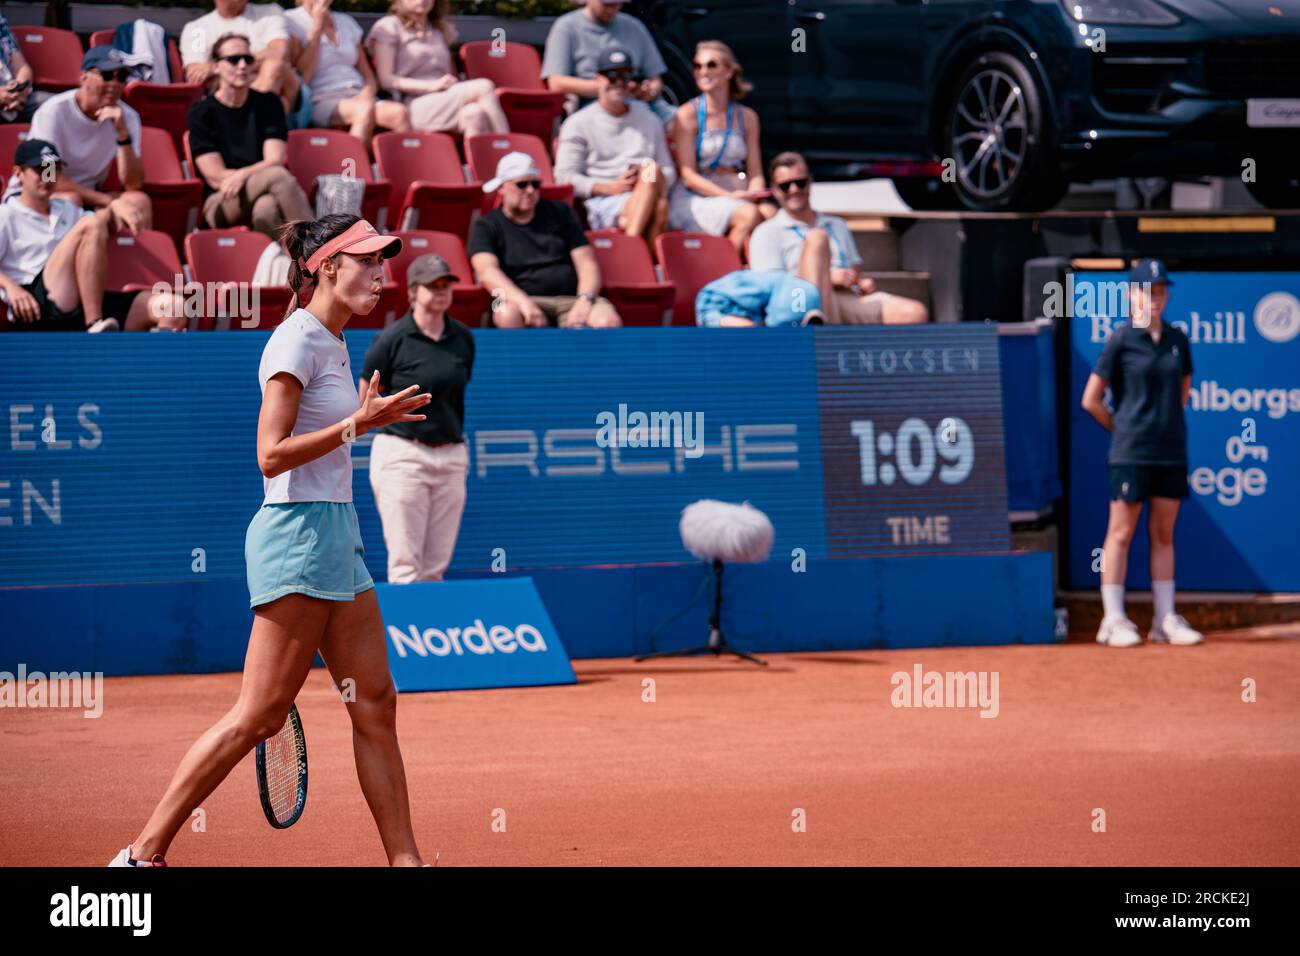 Båstad, Sweden. 07 15 2023. Olga Danilovic against Emma Navarro final Nordea Open 2023. Olga Danilovic won. Daniel Bengtsson / Alamy News Stock Photo